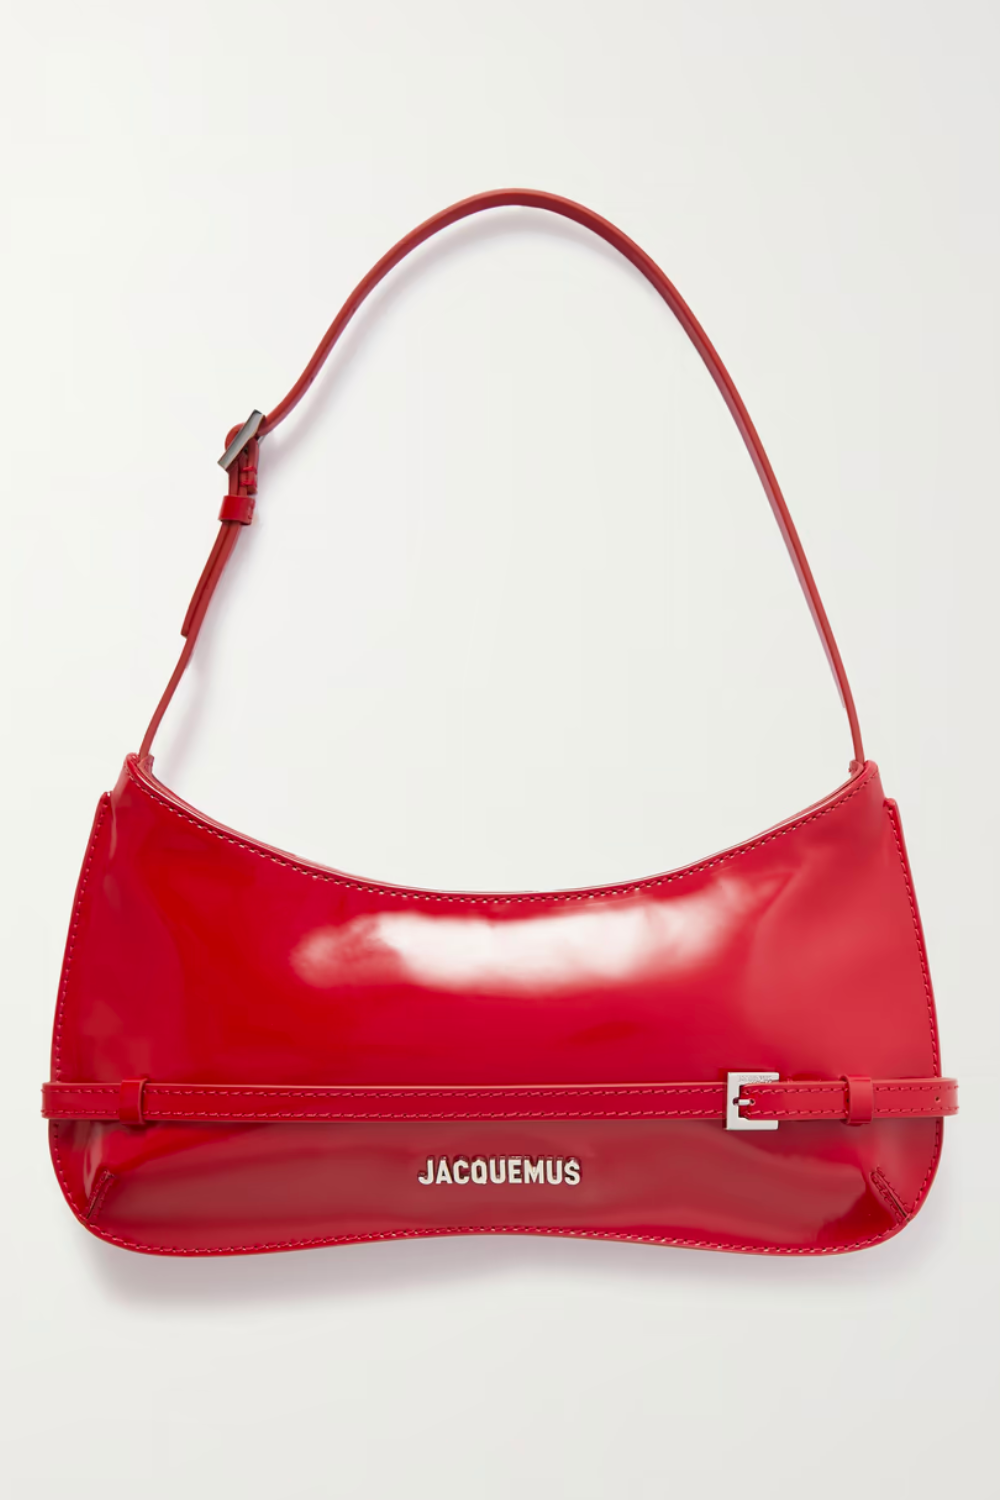  Jacquemus-Red-Bag